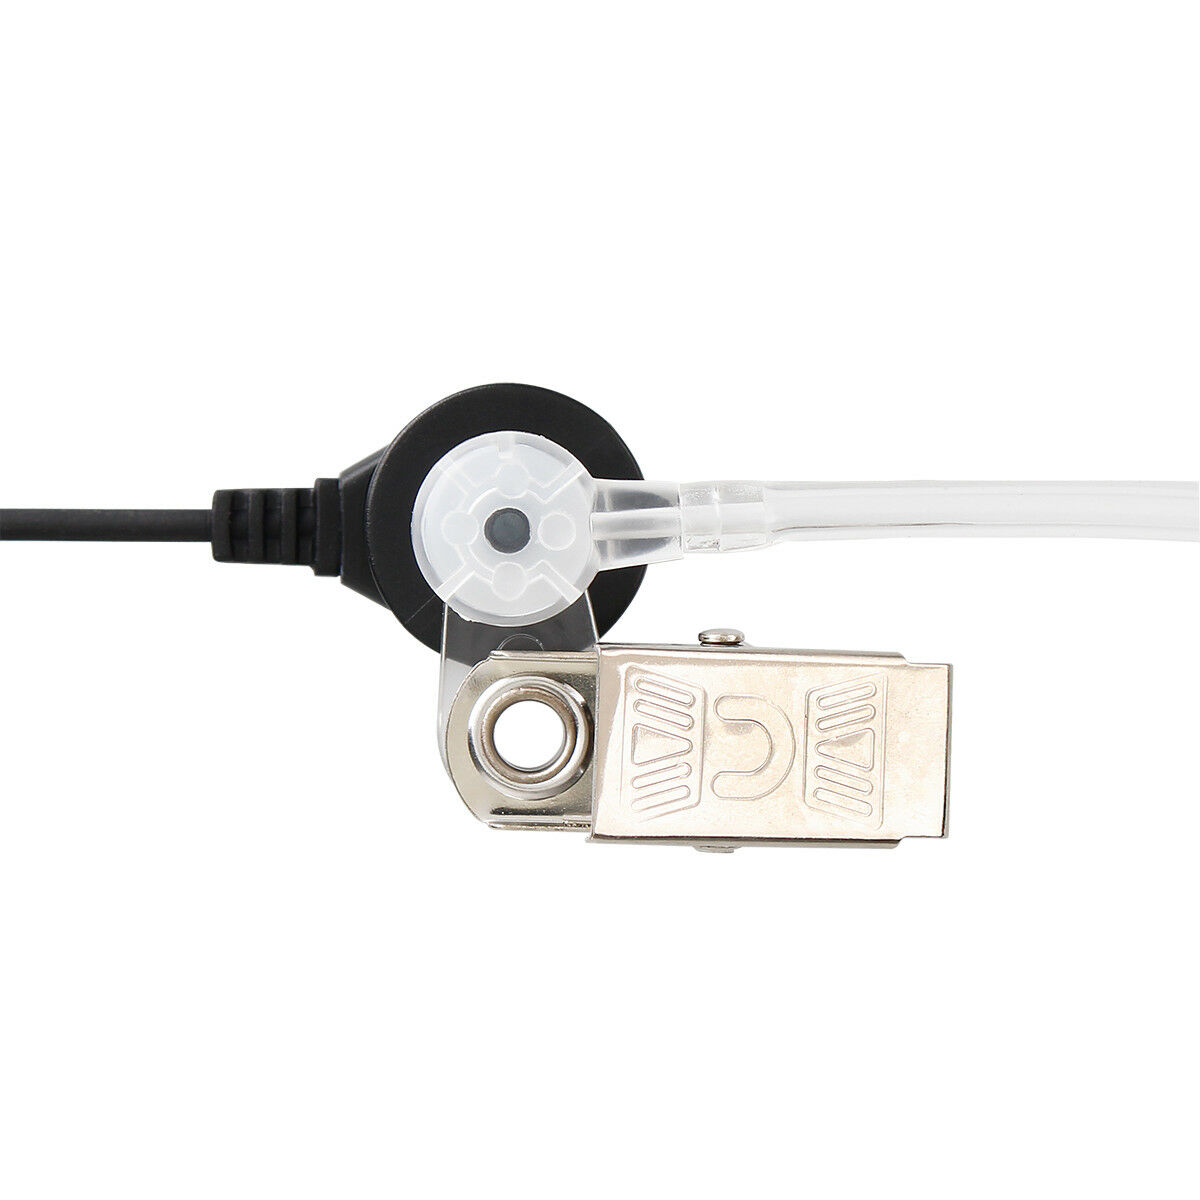 1-Pin 2.5mm 1-Wire Surveillance Earpiece for Motorola Talkabout Radios